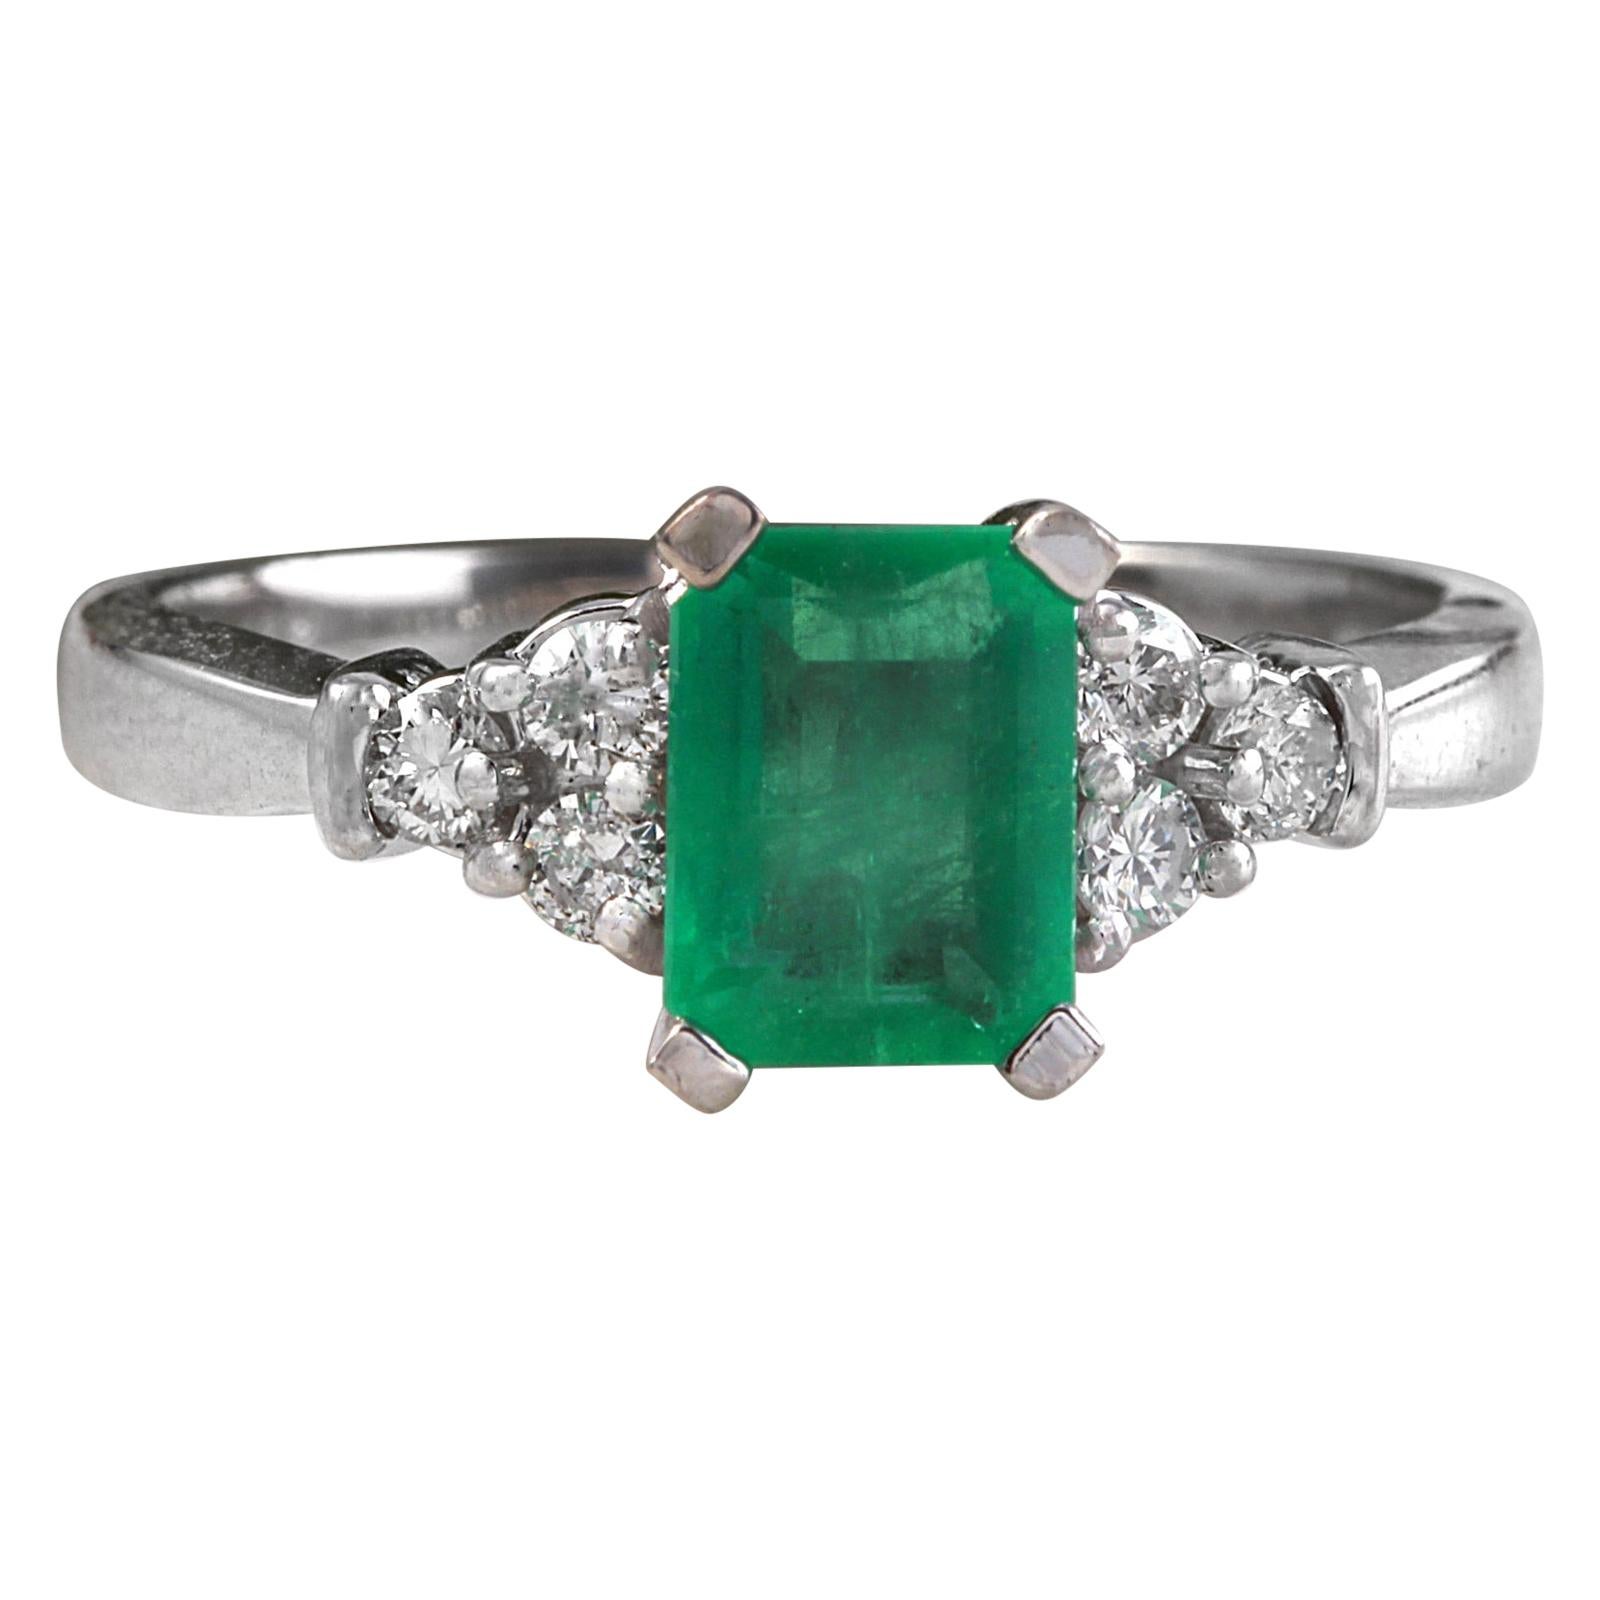 2.35 Carat Natural Emerald and Diamond 14 Karat Solid White Gold Ring